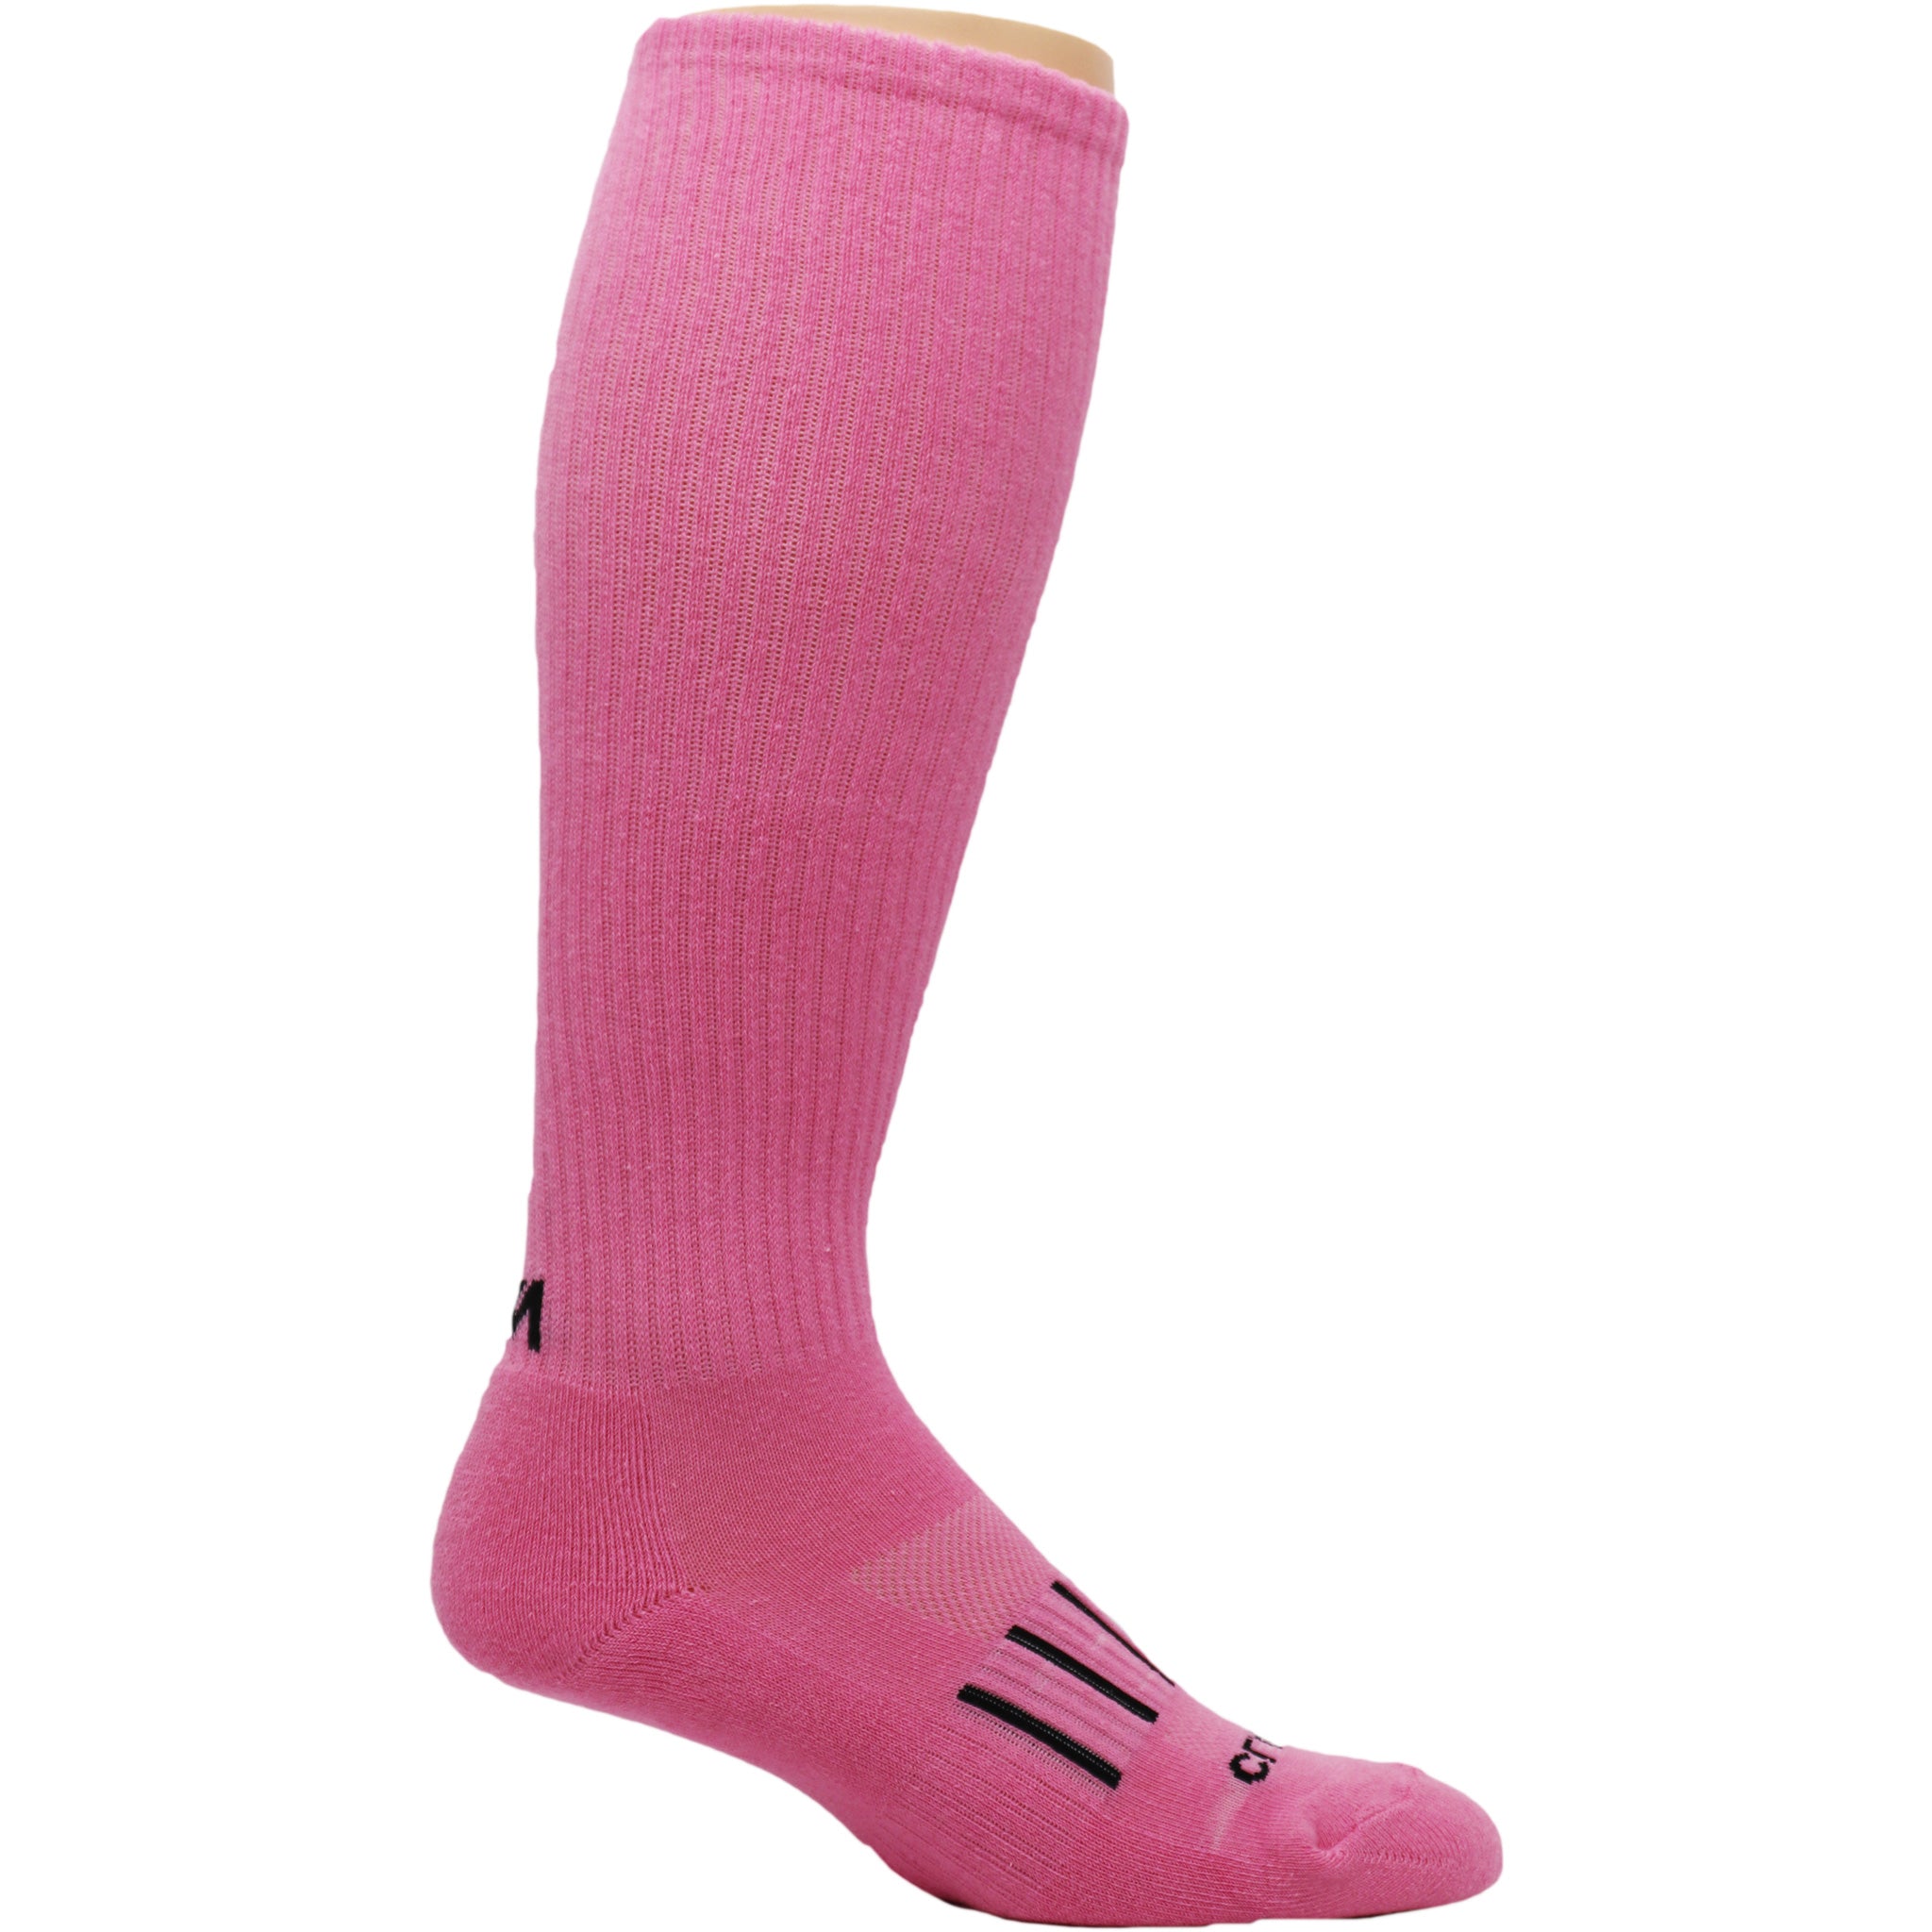 Classic Pink Knee High Socks